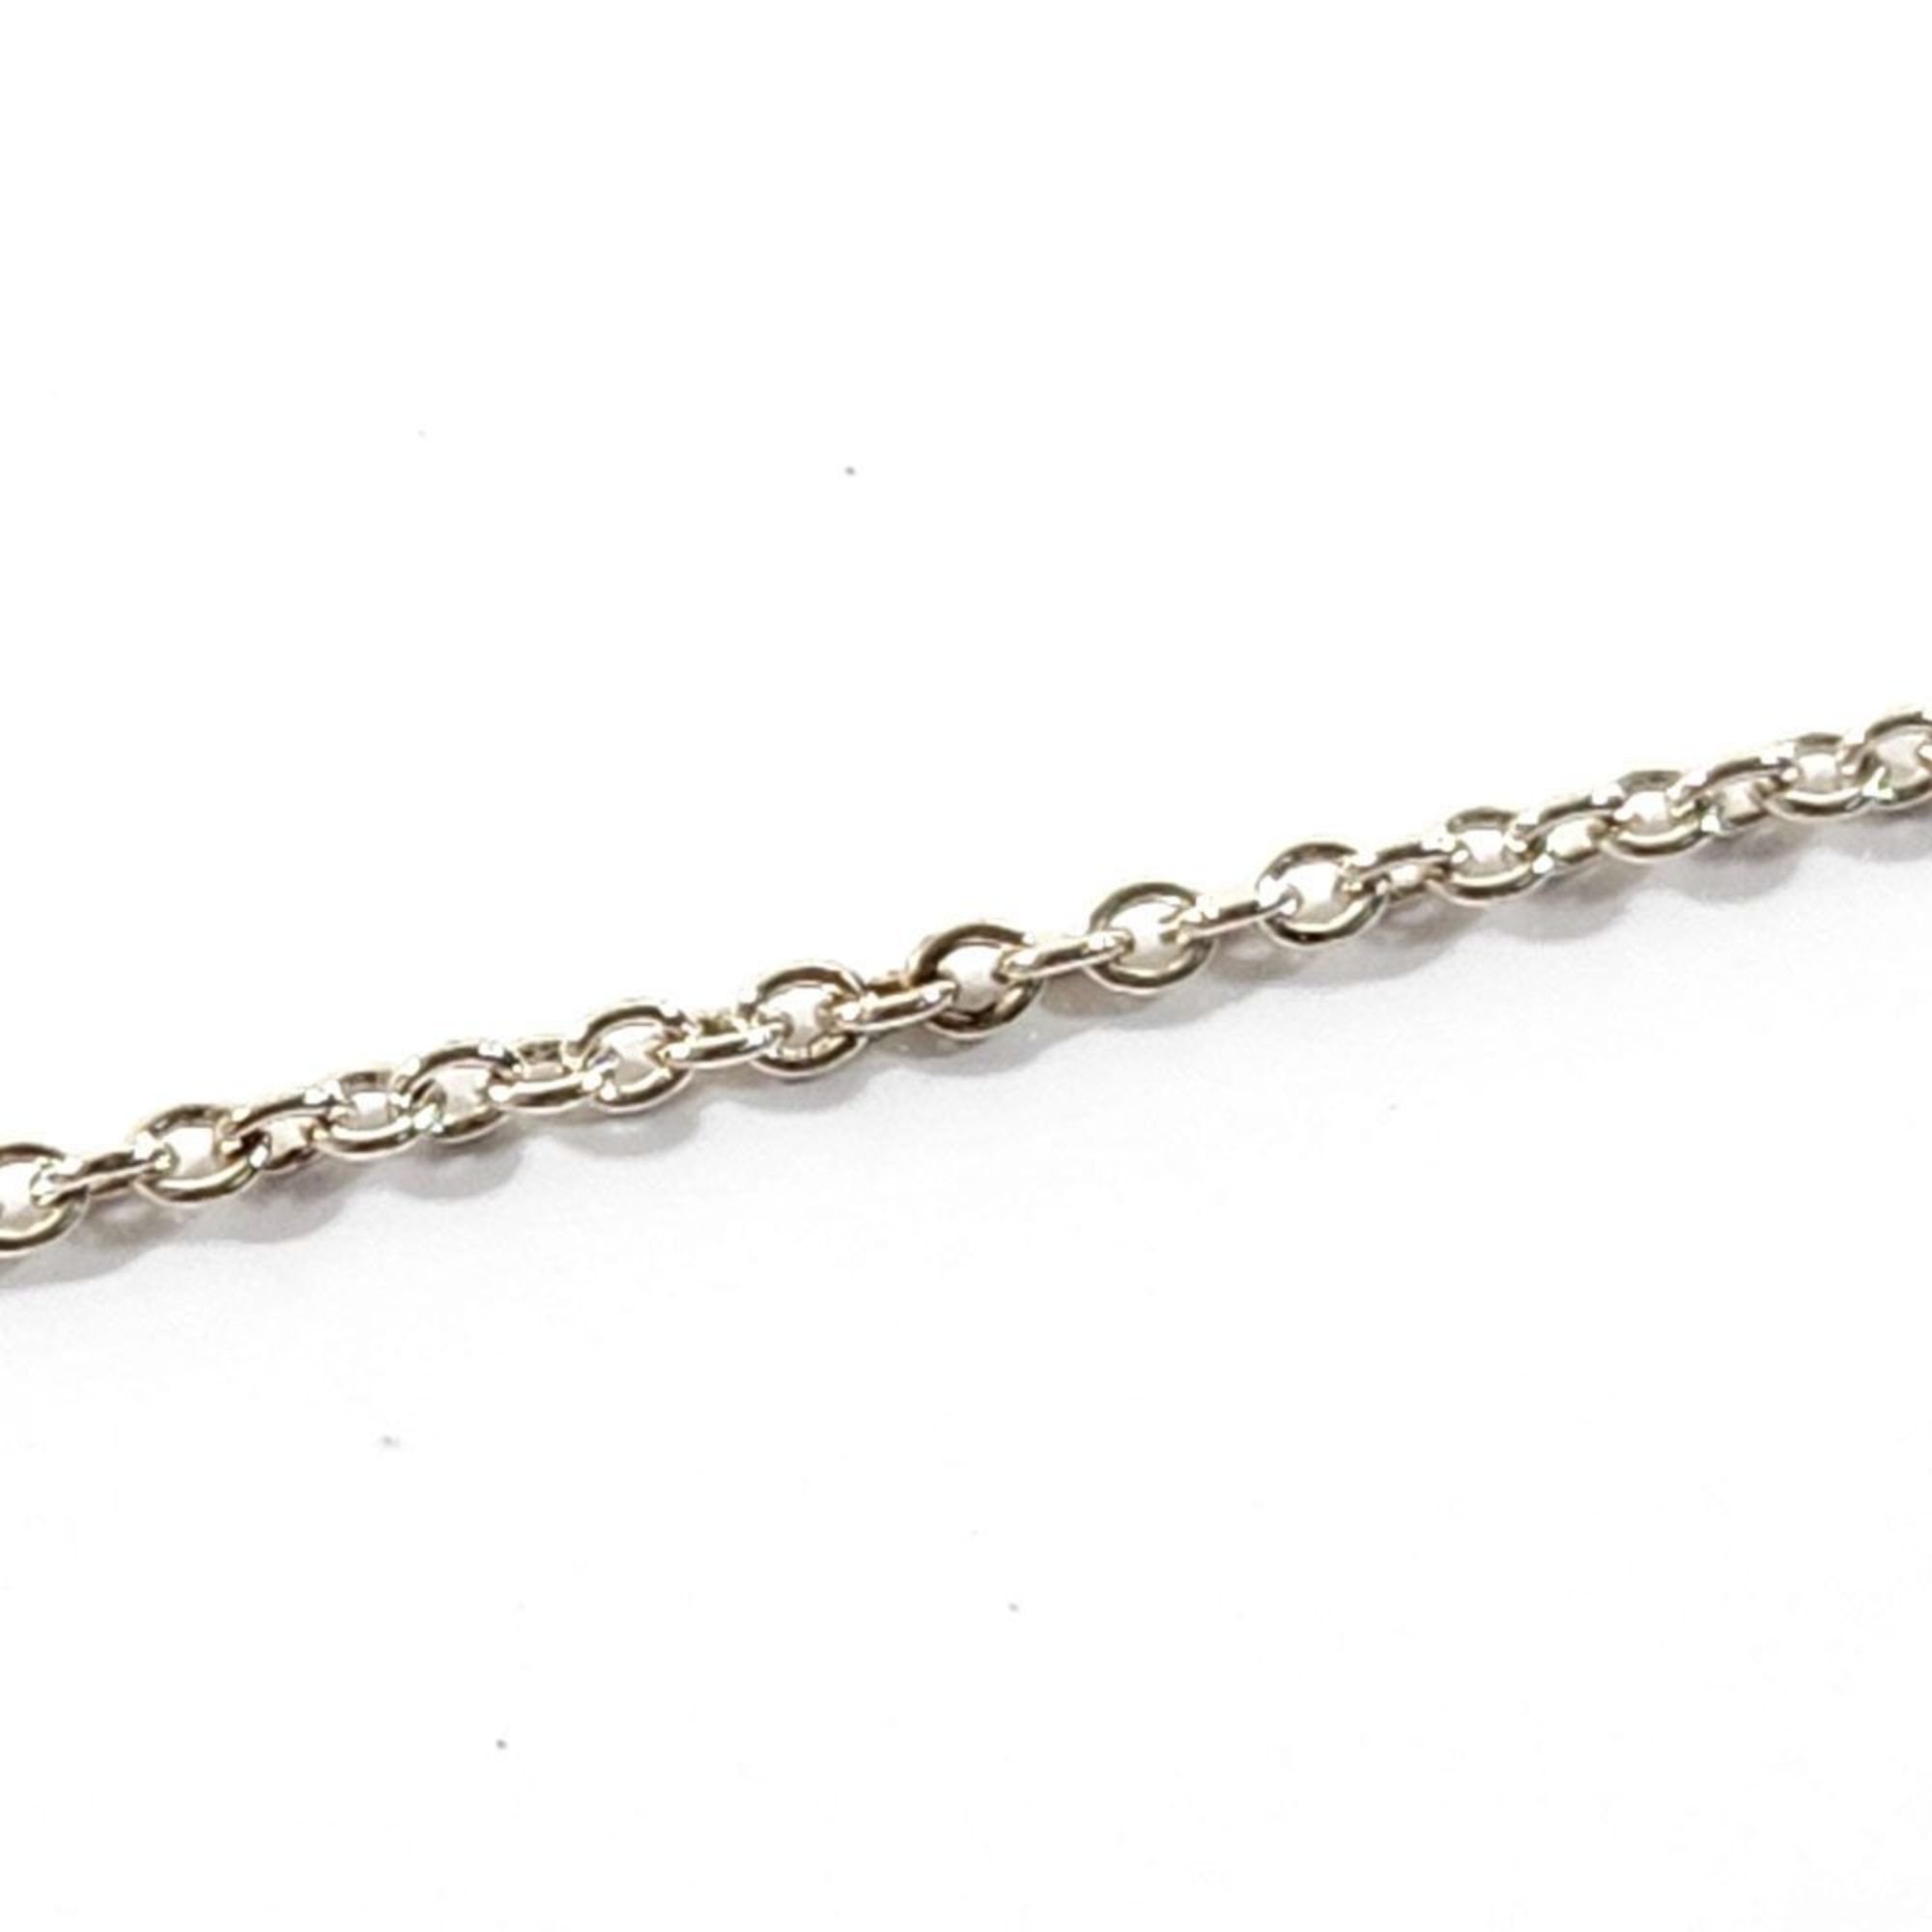 Tiffany Teardrop Necklace Pendant SV Sterling Silver Women's Large Size 925 Droplet